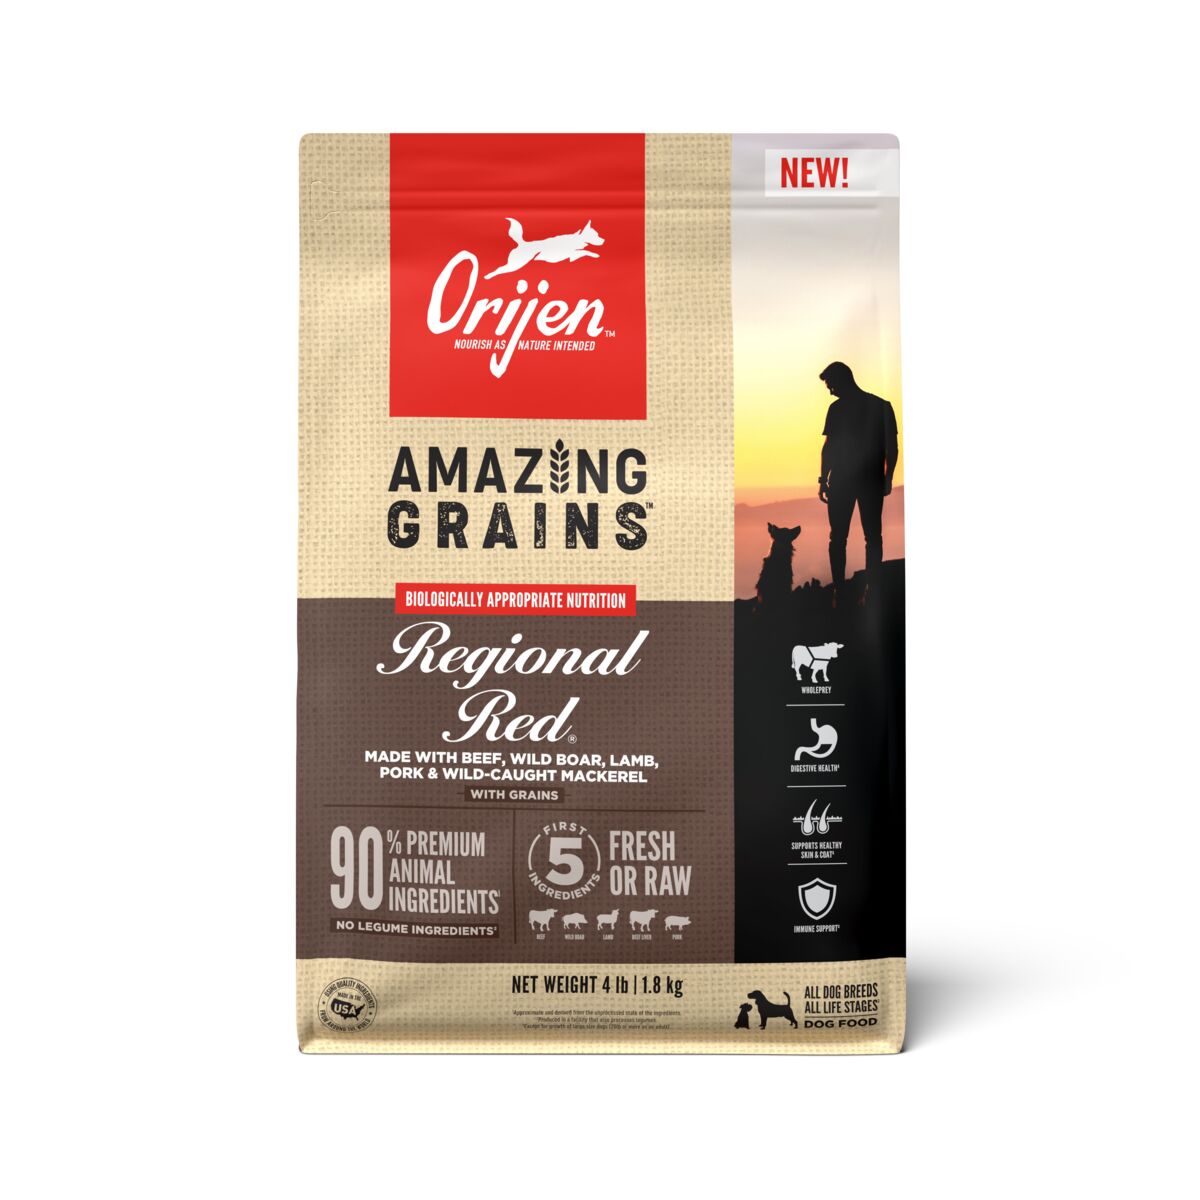 Amazing Grains Regional Red Dry Dog Food